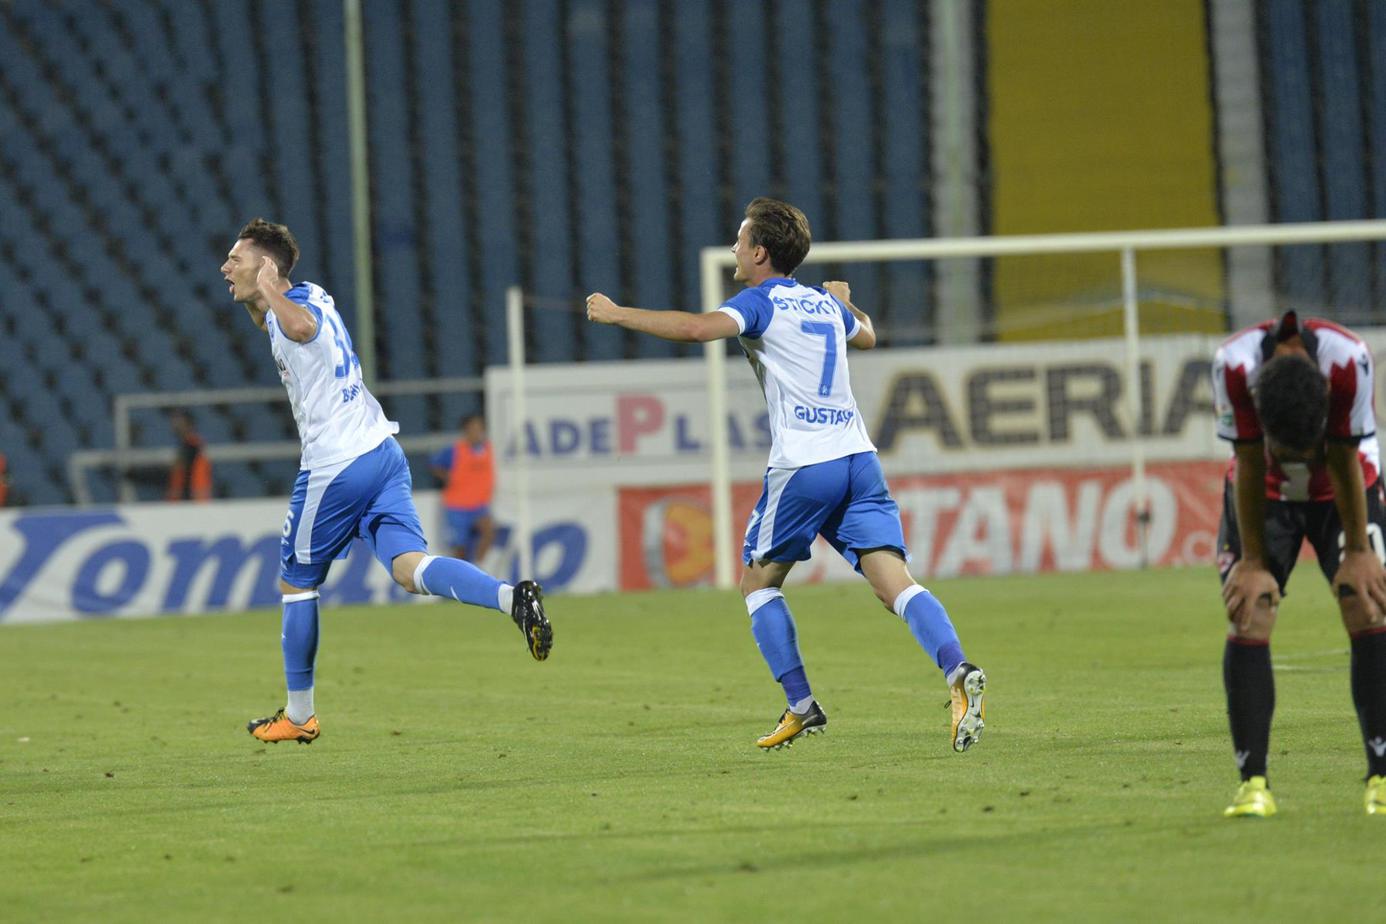 Ponturi pariuri fotbal Liga 1 - Sepsi vs CSU Craiova